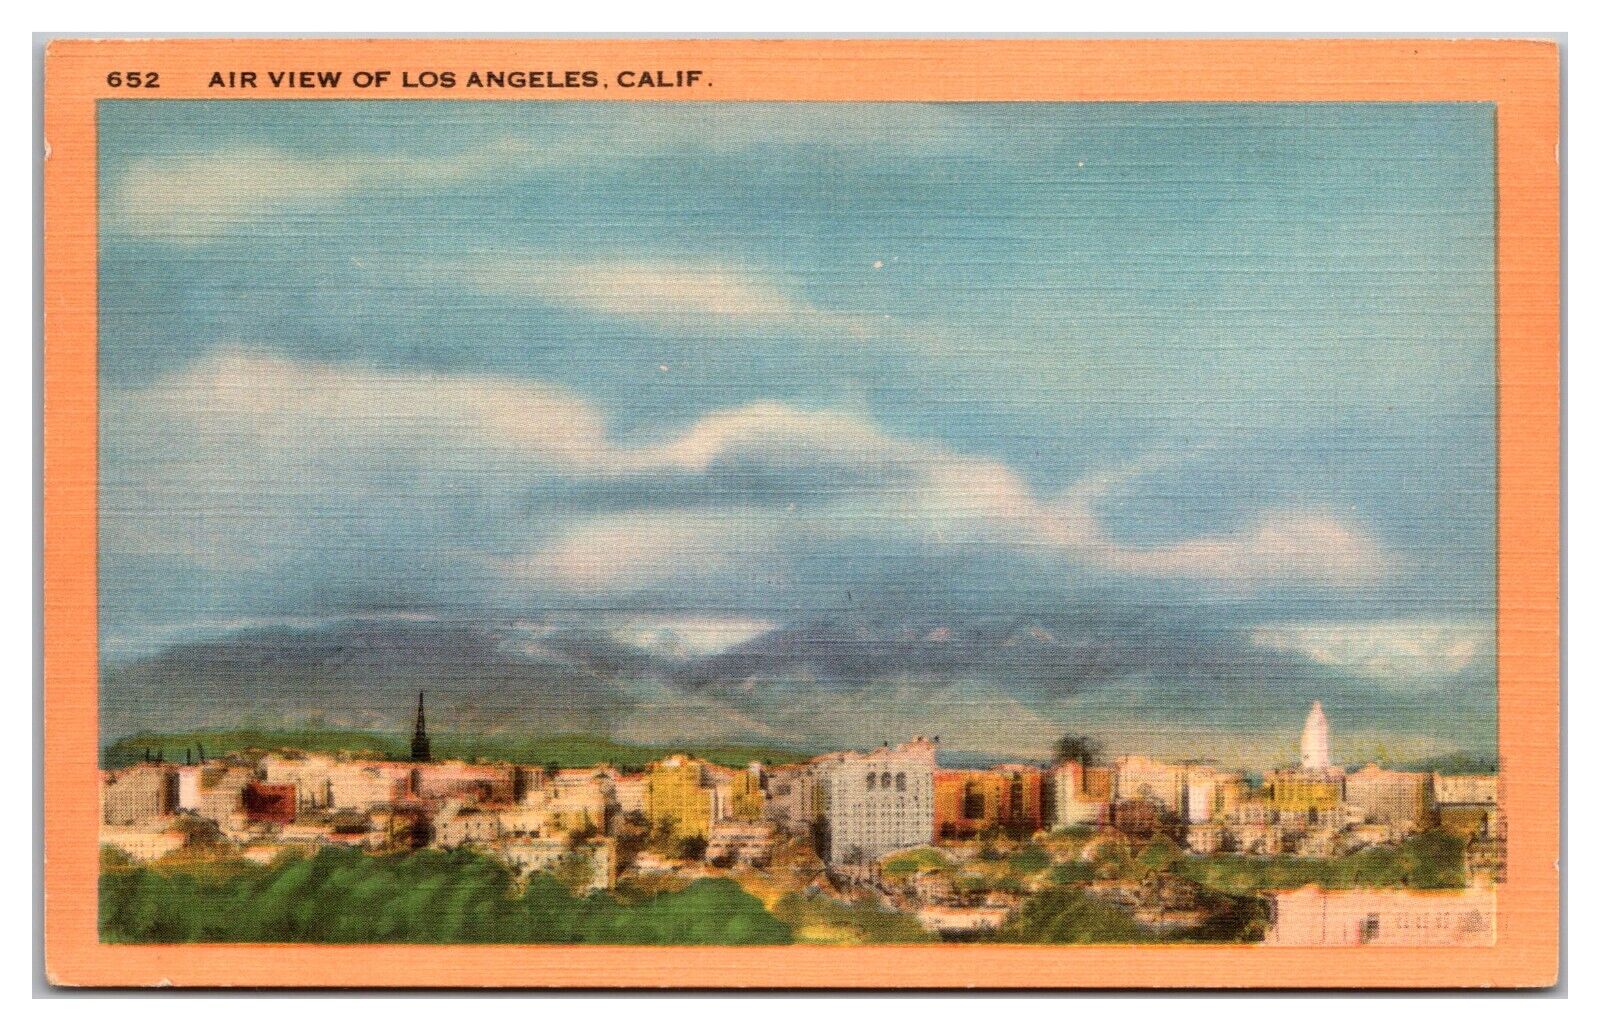 Air View Of Los Angeles California 652 Postcard